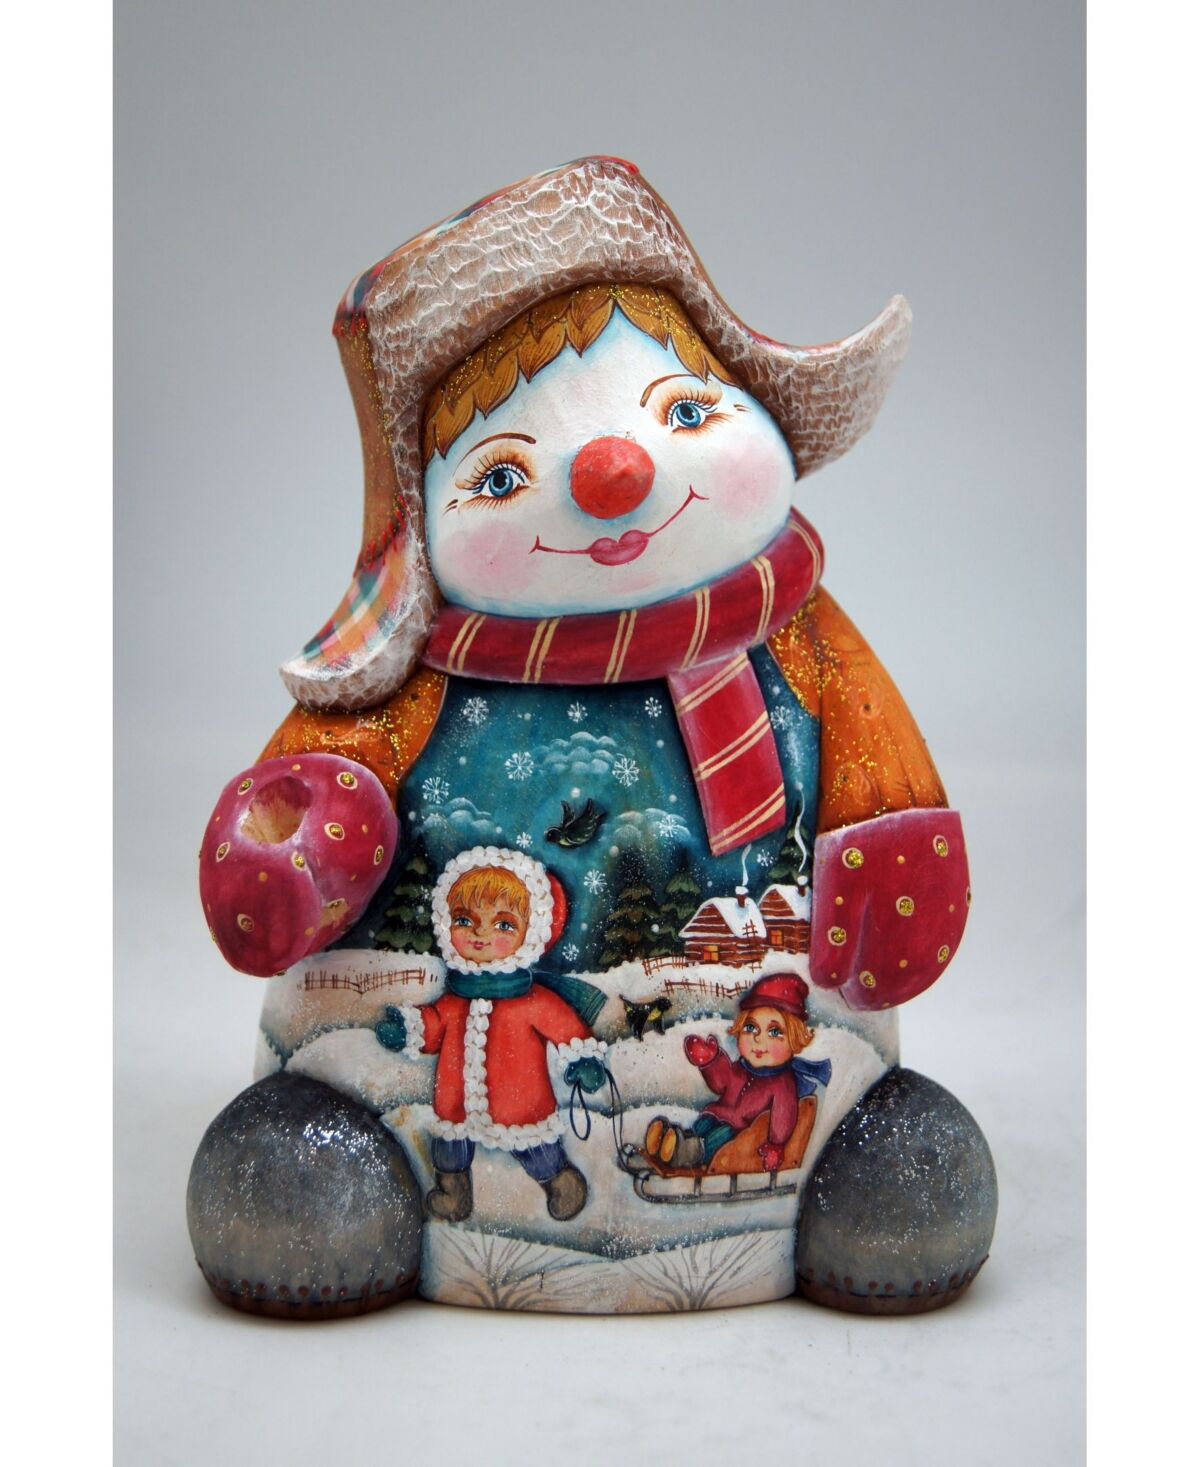 G.DeBrekht Woodcarved and Hand Painted Santa Snowman Figurine - Multi